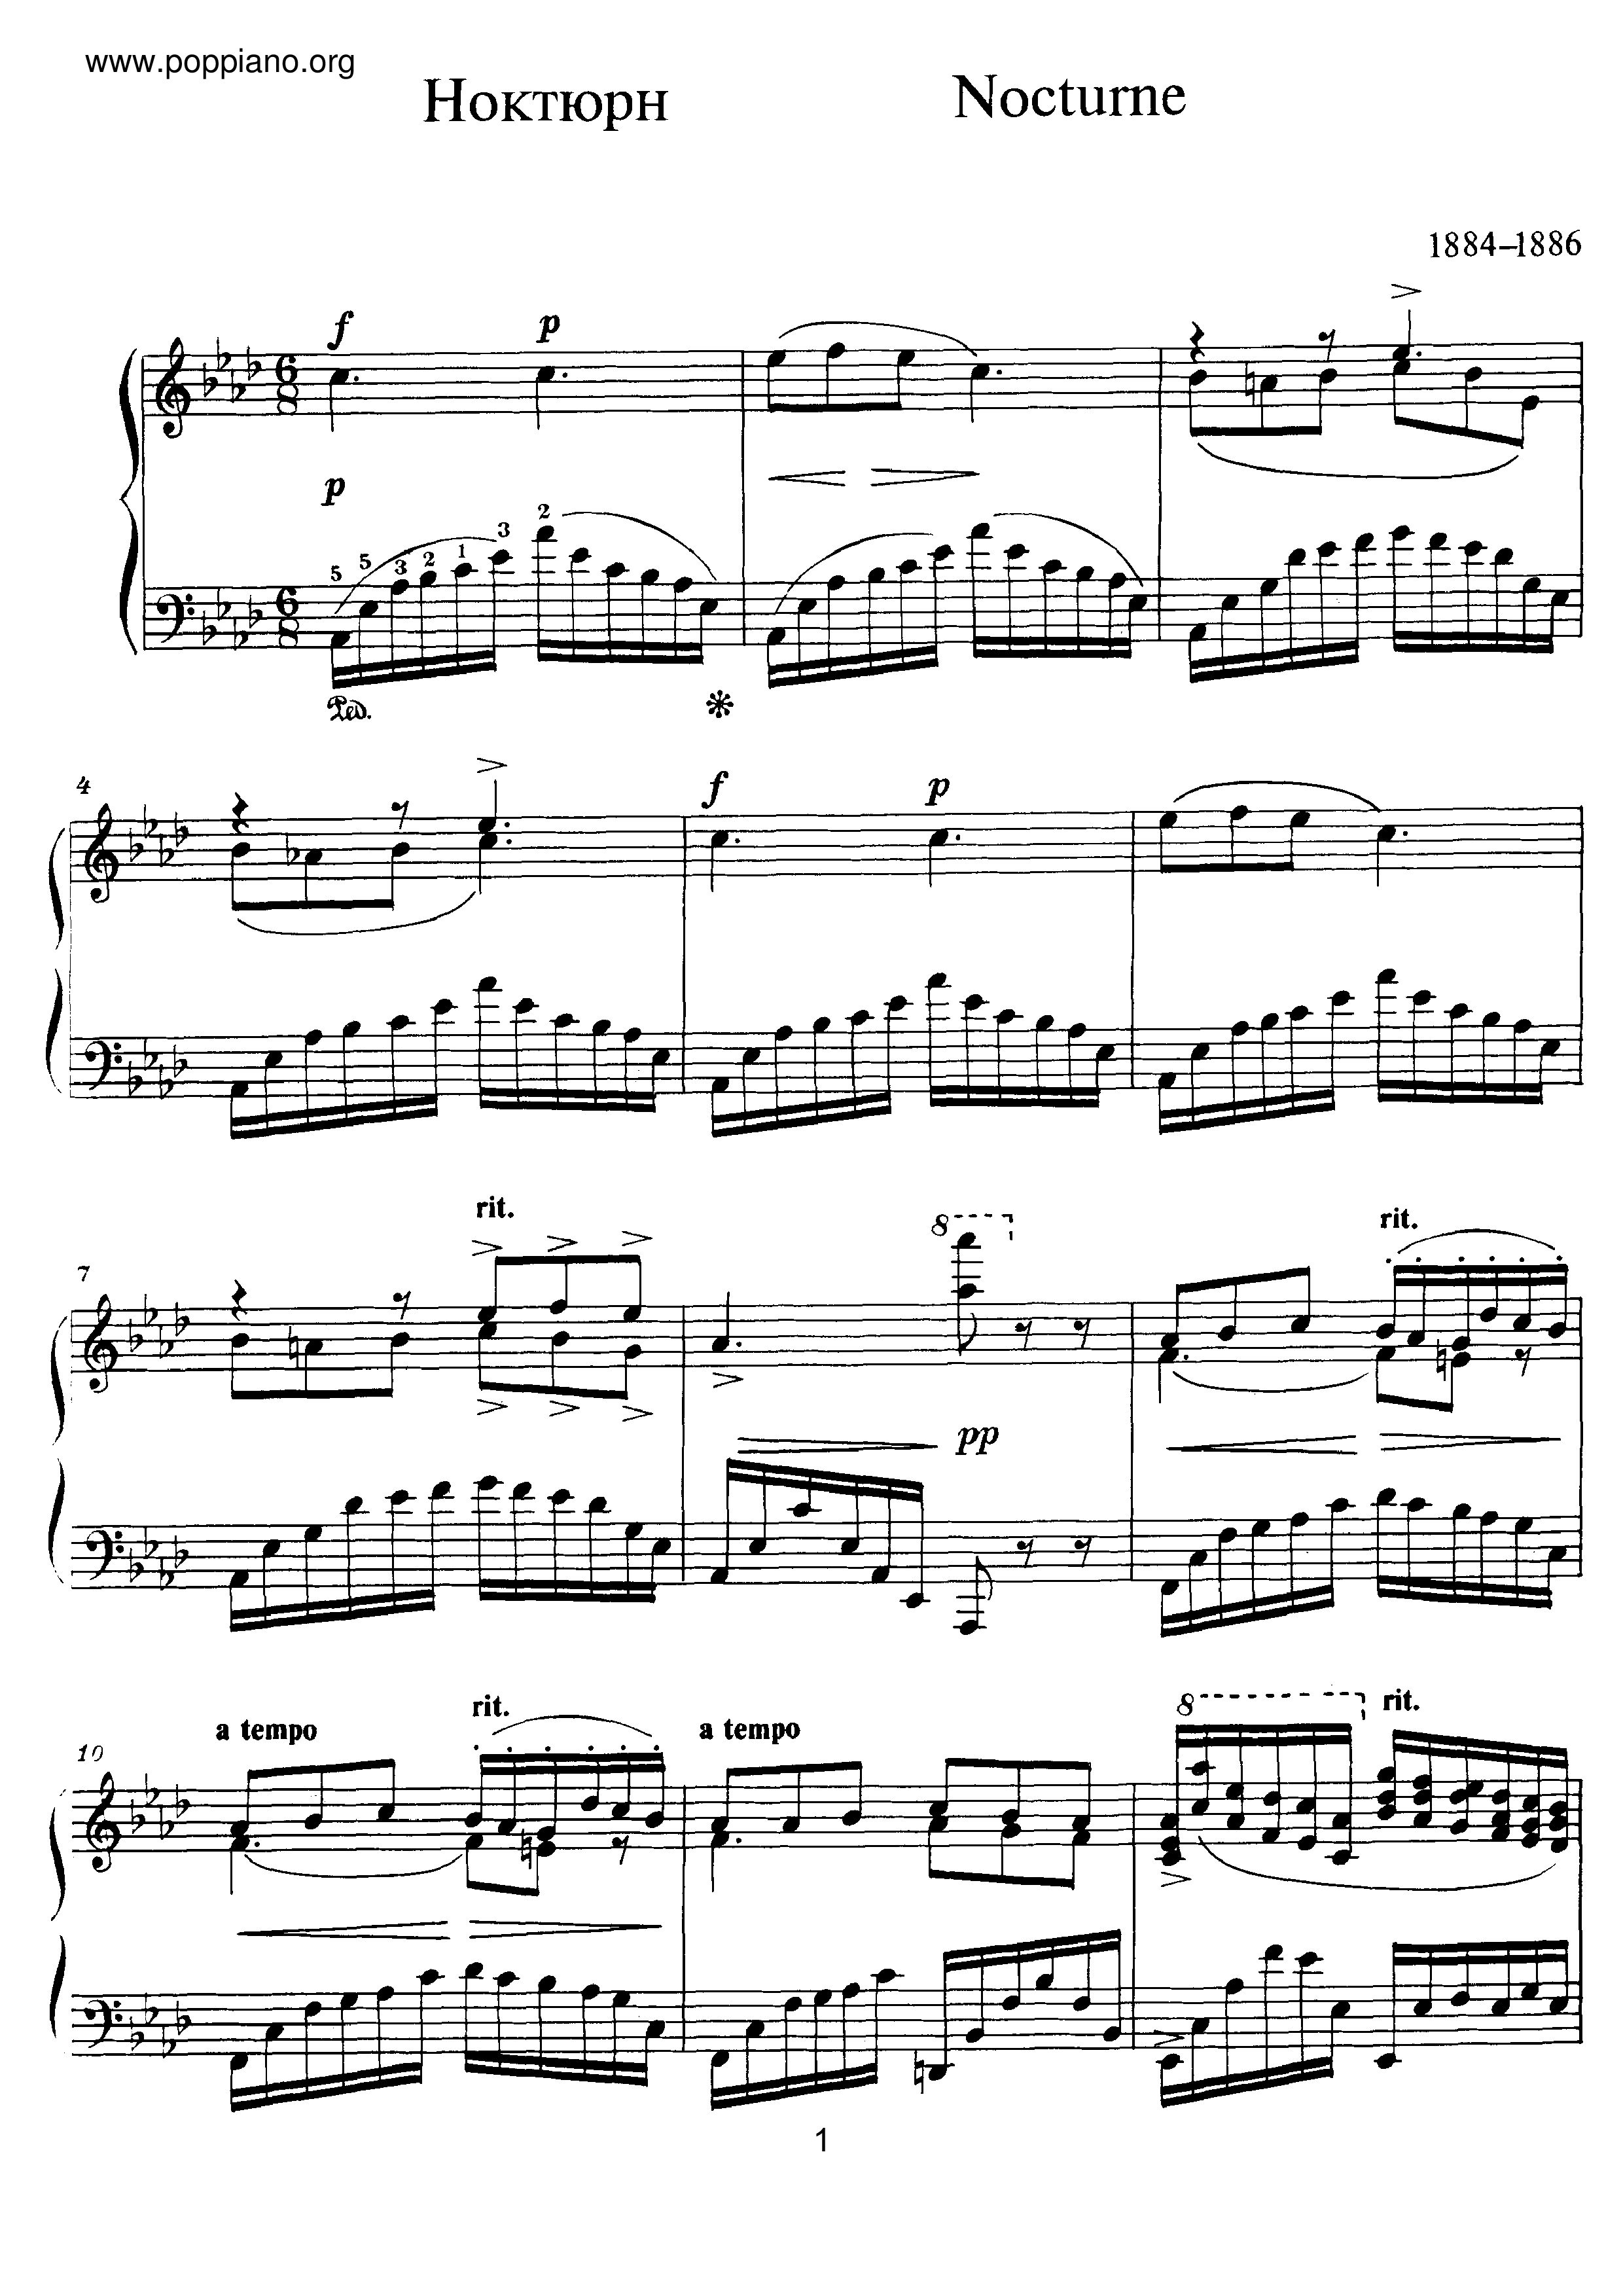 Nocturne in Ab Major Score